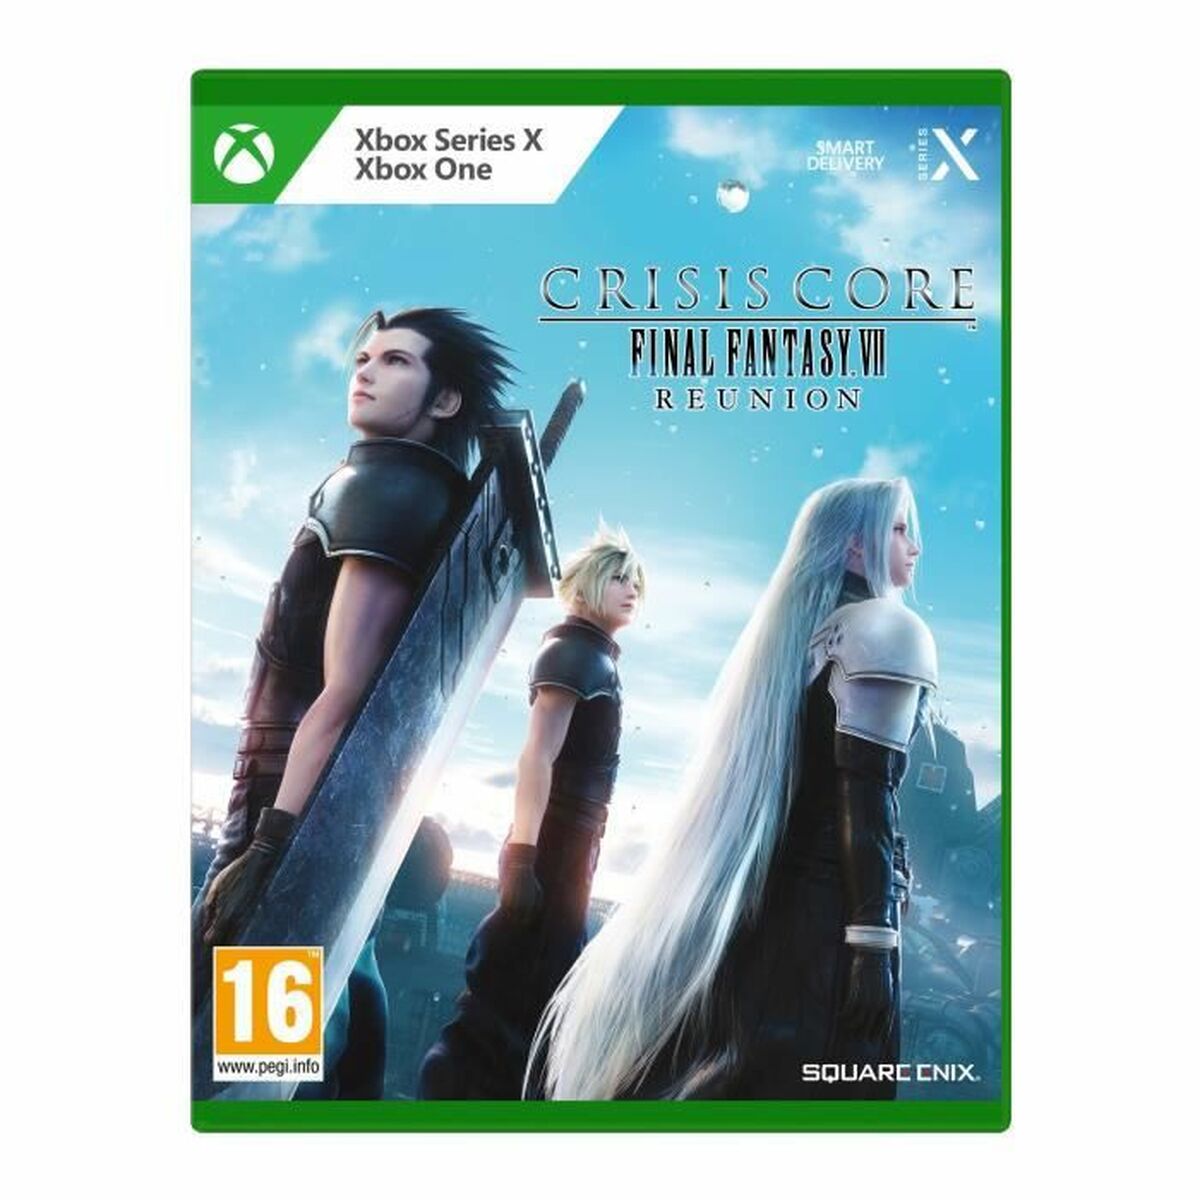 Jeu vidéo Xbox One Square Enix FINAL FANTASY VII: Crisis Core Reunion